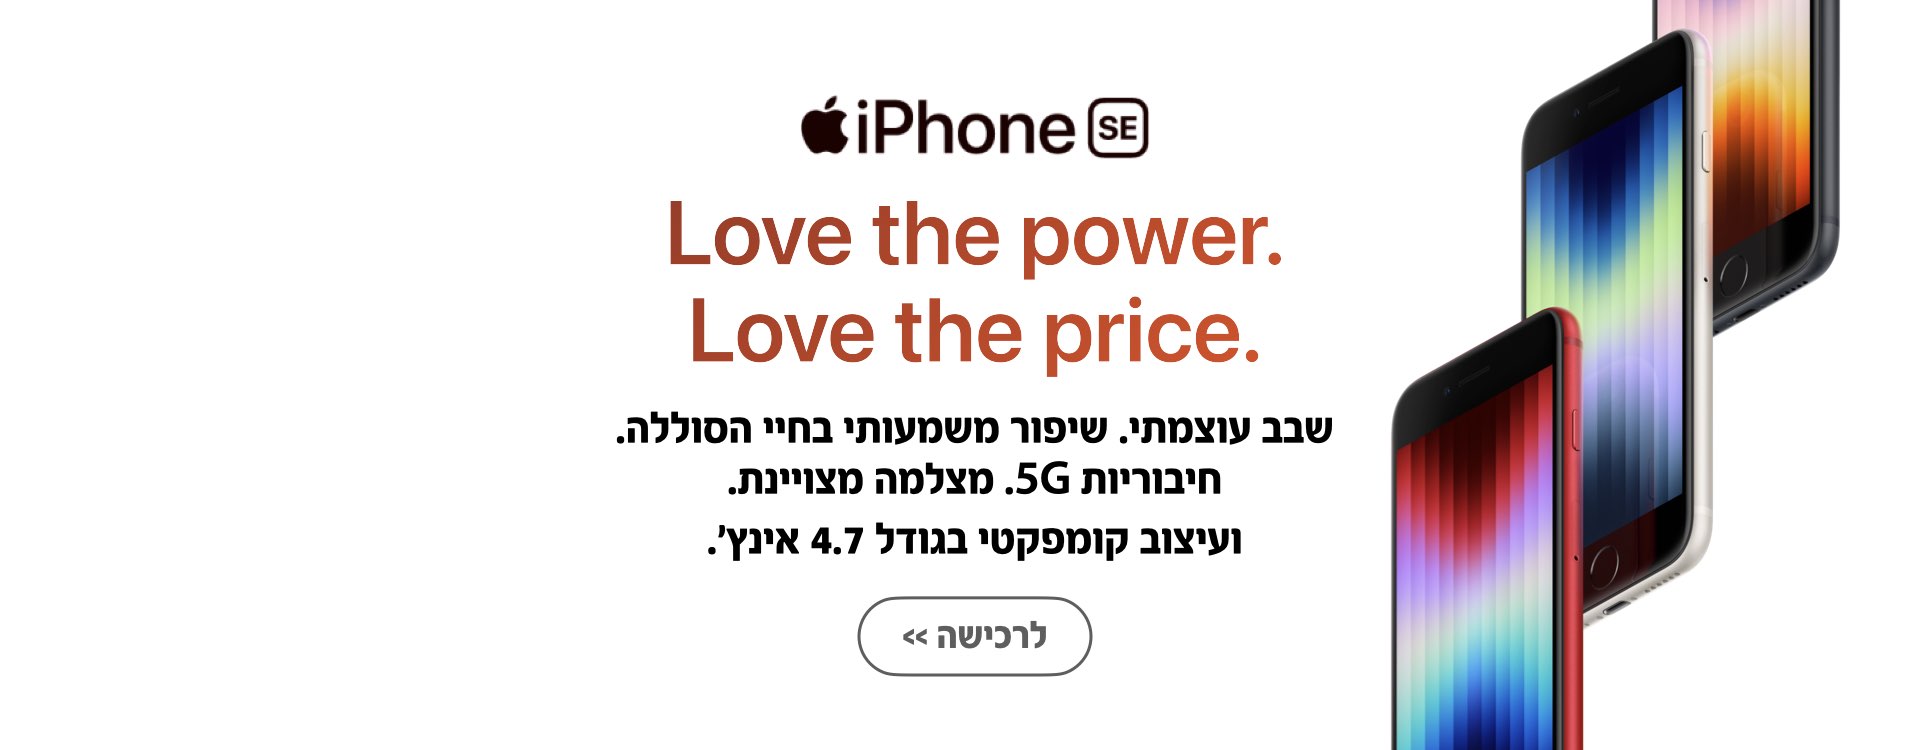 iPhone SE. Love the power. Love the price. שבב עוצמתי. שיפור משמעותי בחיי הסוללה. חיבוריות 5G. מצלמה מצוינת. ועיצוב קומפקטי בגודל 4.7 אינץ'. לרכישה